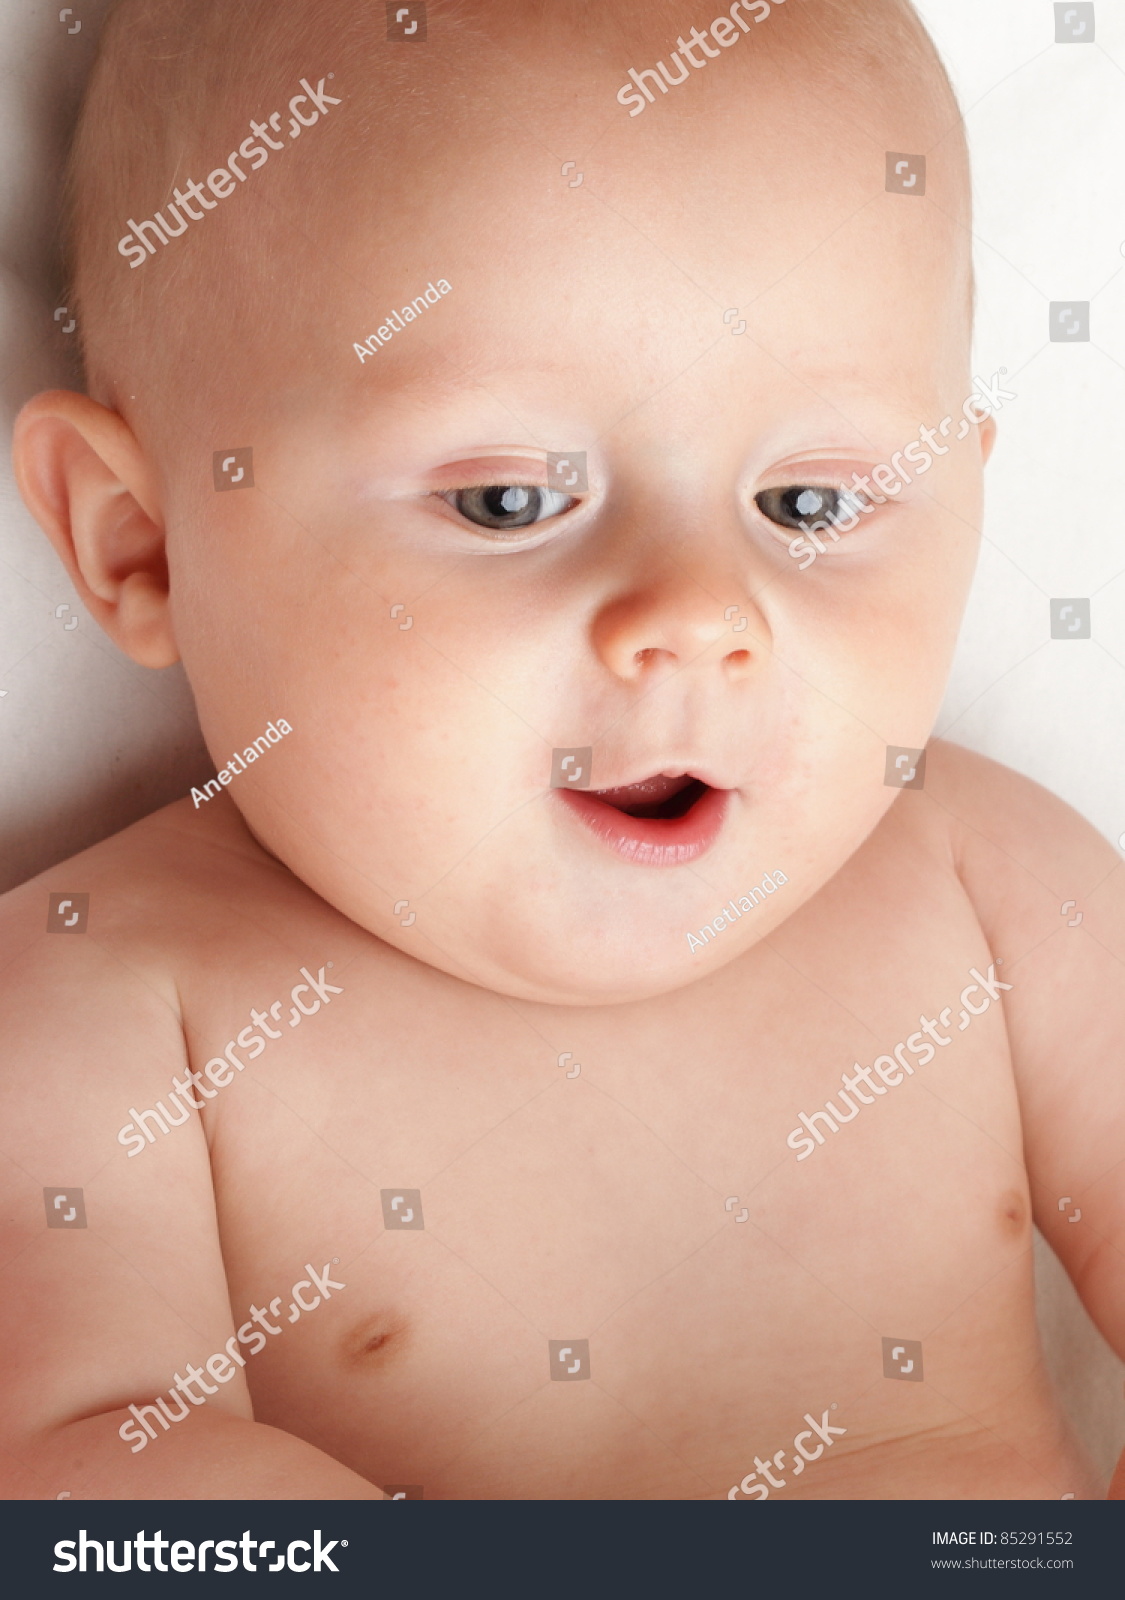 Baby Boy In Diaper On White, Blue Eye Stock Photo 85291552 ...